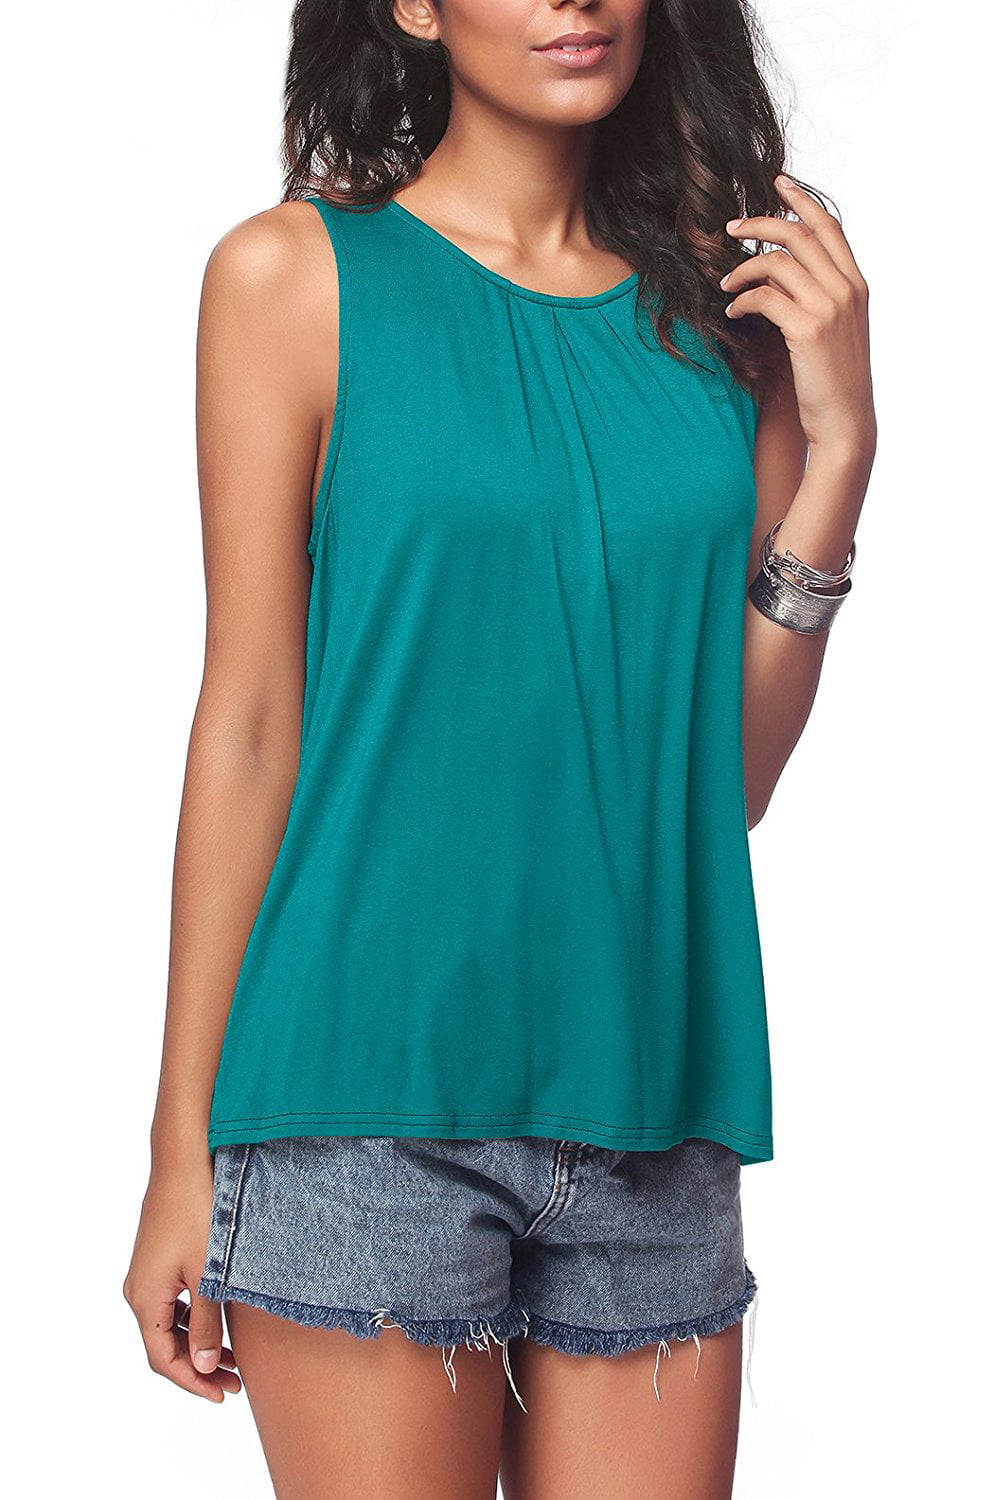 UKAP - Summer Sleeveless Women T-Shirts Solid Color Tees Vests Casual